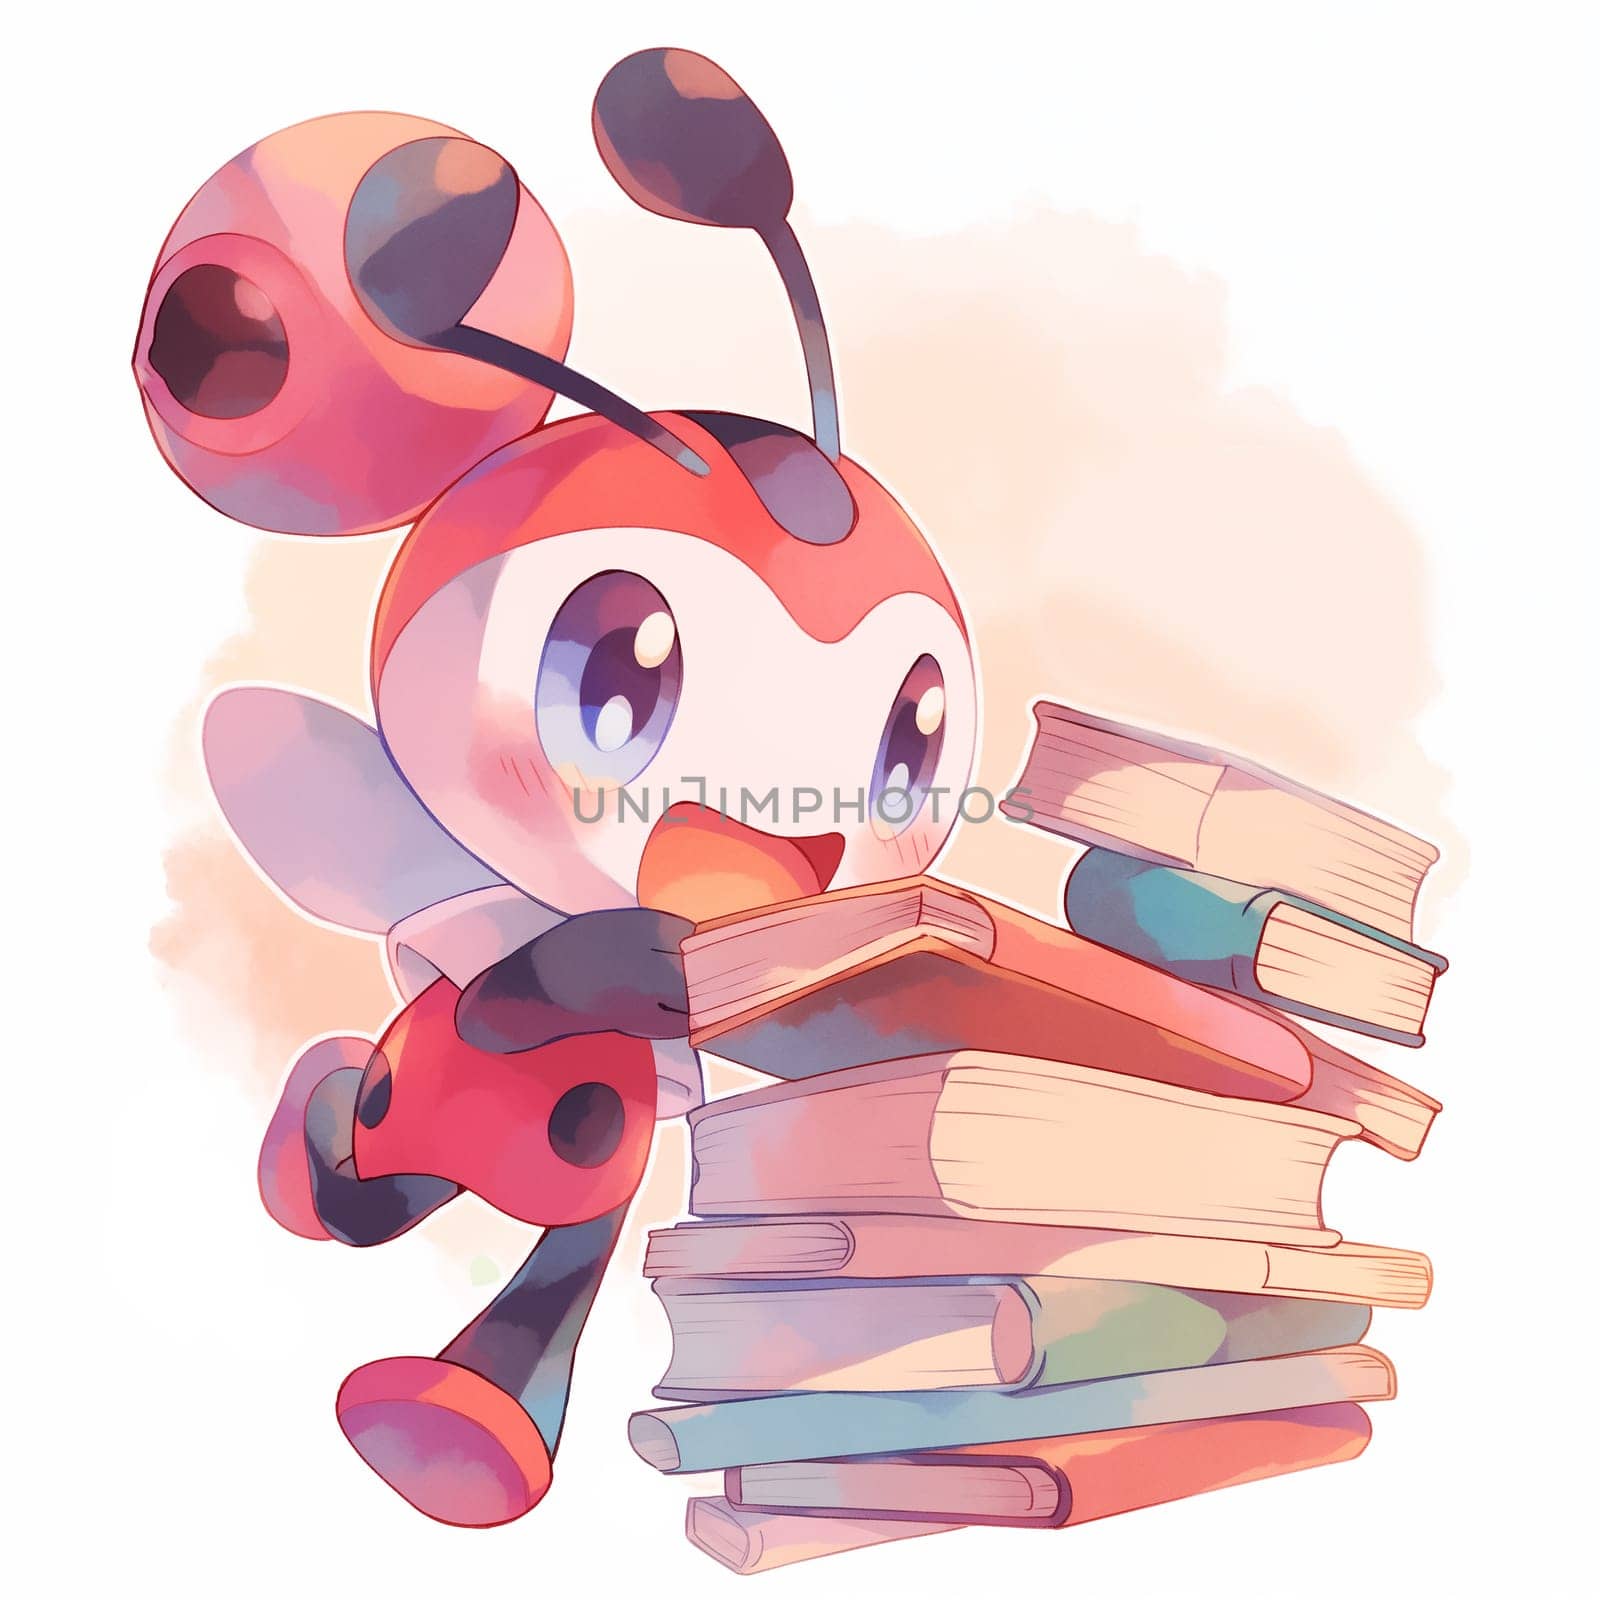 Hand Drawn Cute Ladybug with Stack of Books in Anime Style. Kawaii Style Illustration. Ladybug Cartoon Drawing on White Background.